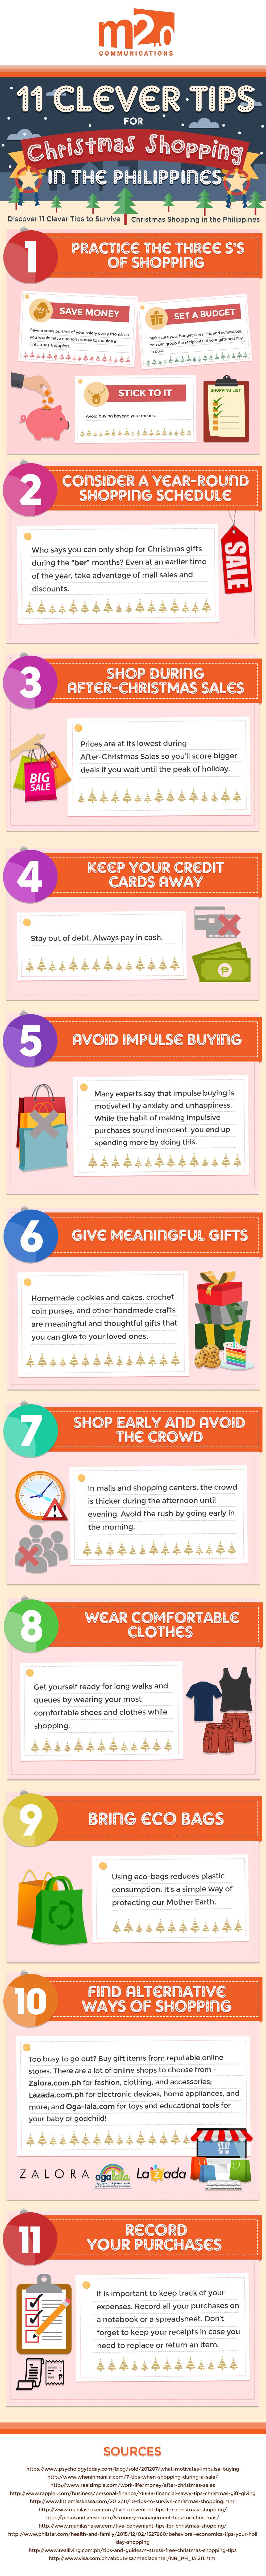 tips-for-christmas-shopping